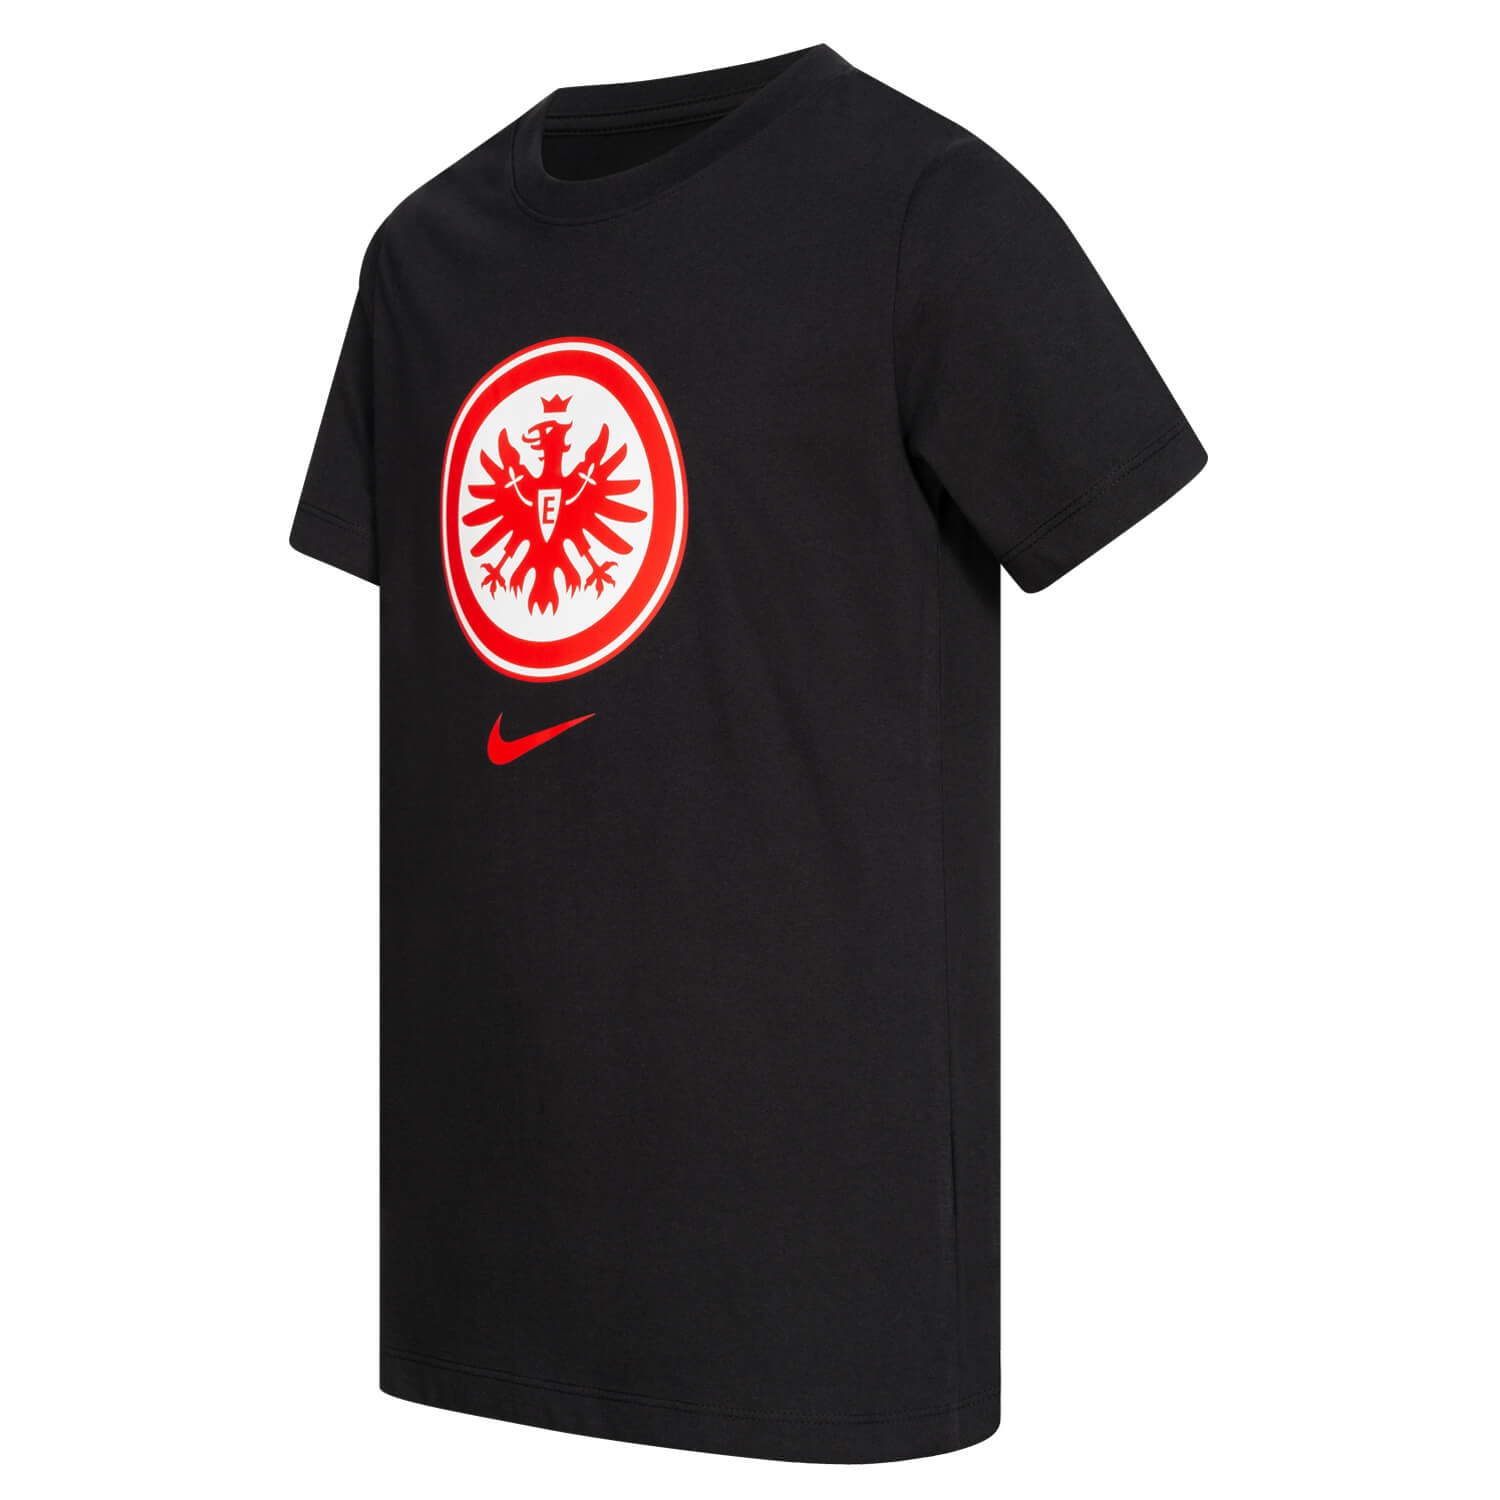 Bild 3: Nike Kids T-Shirt 23 Schwarz